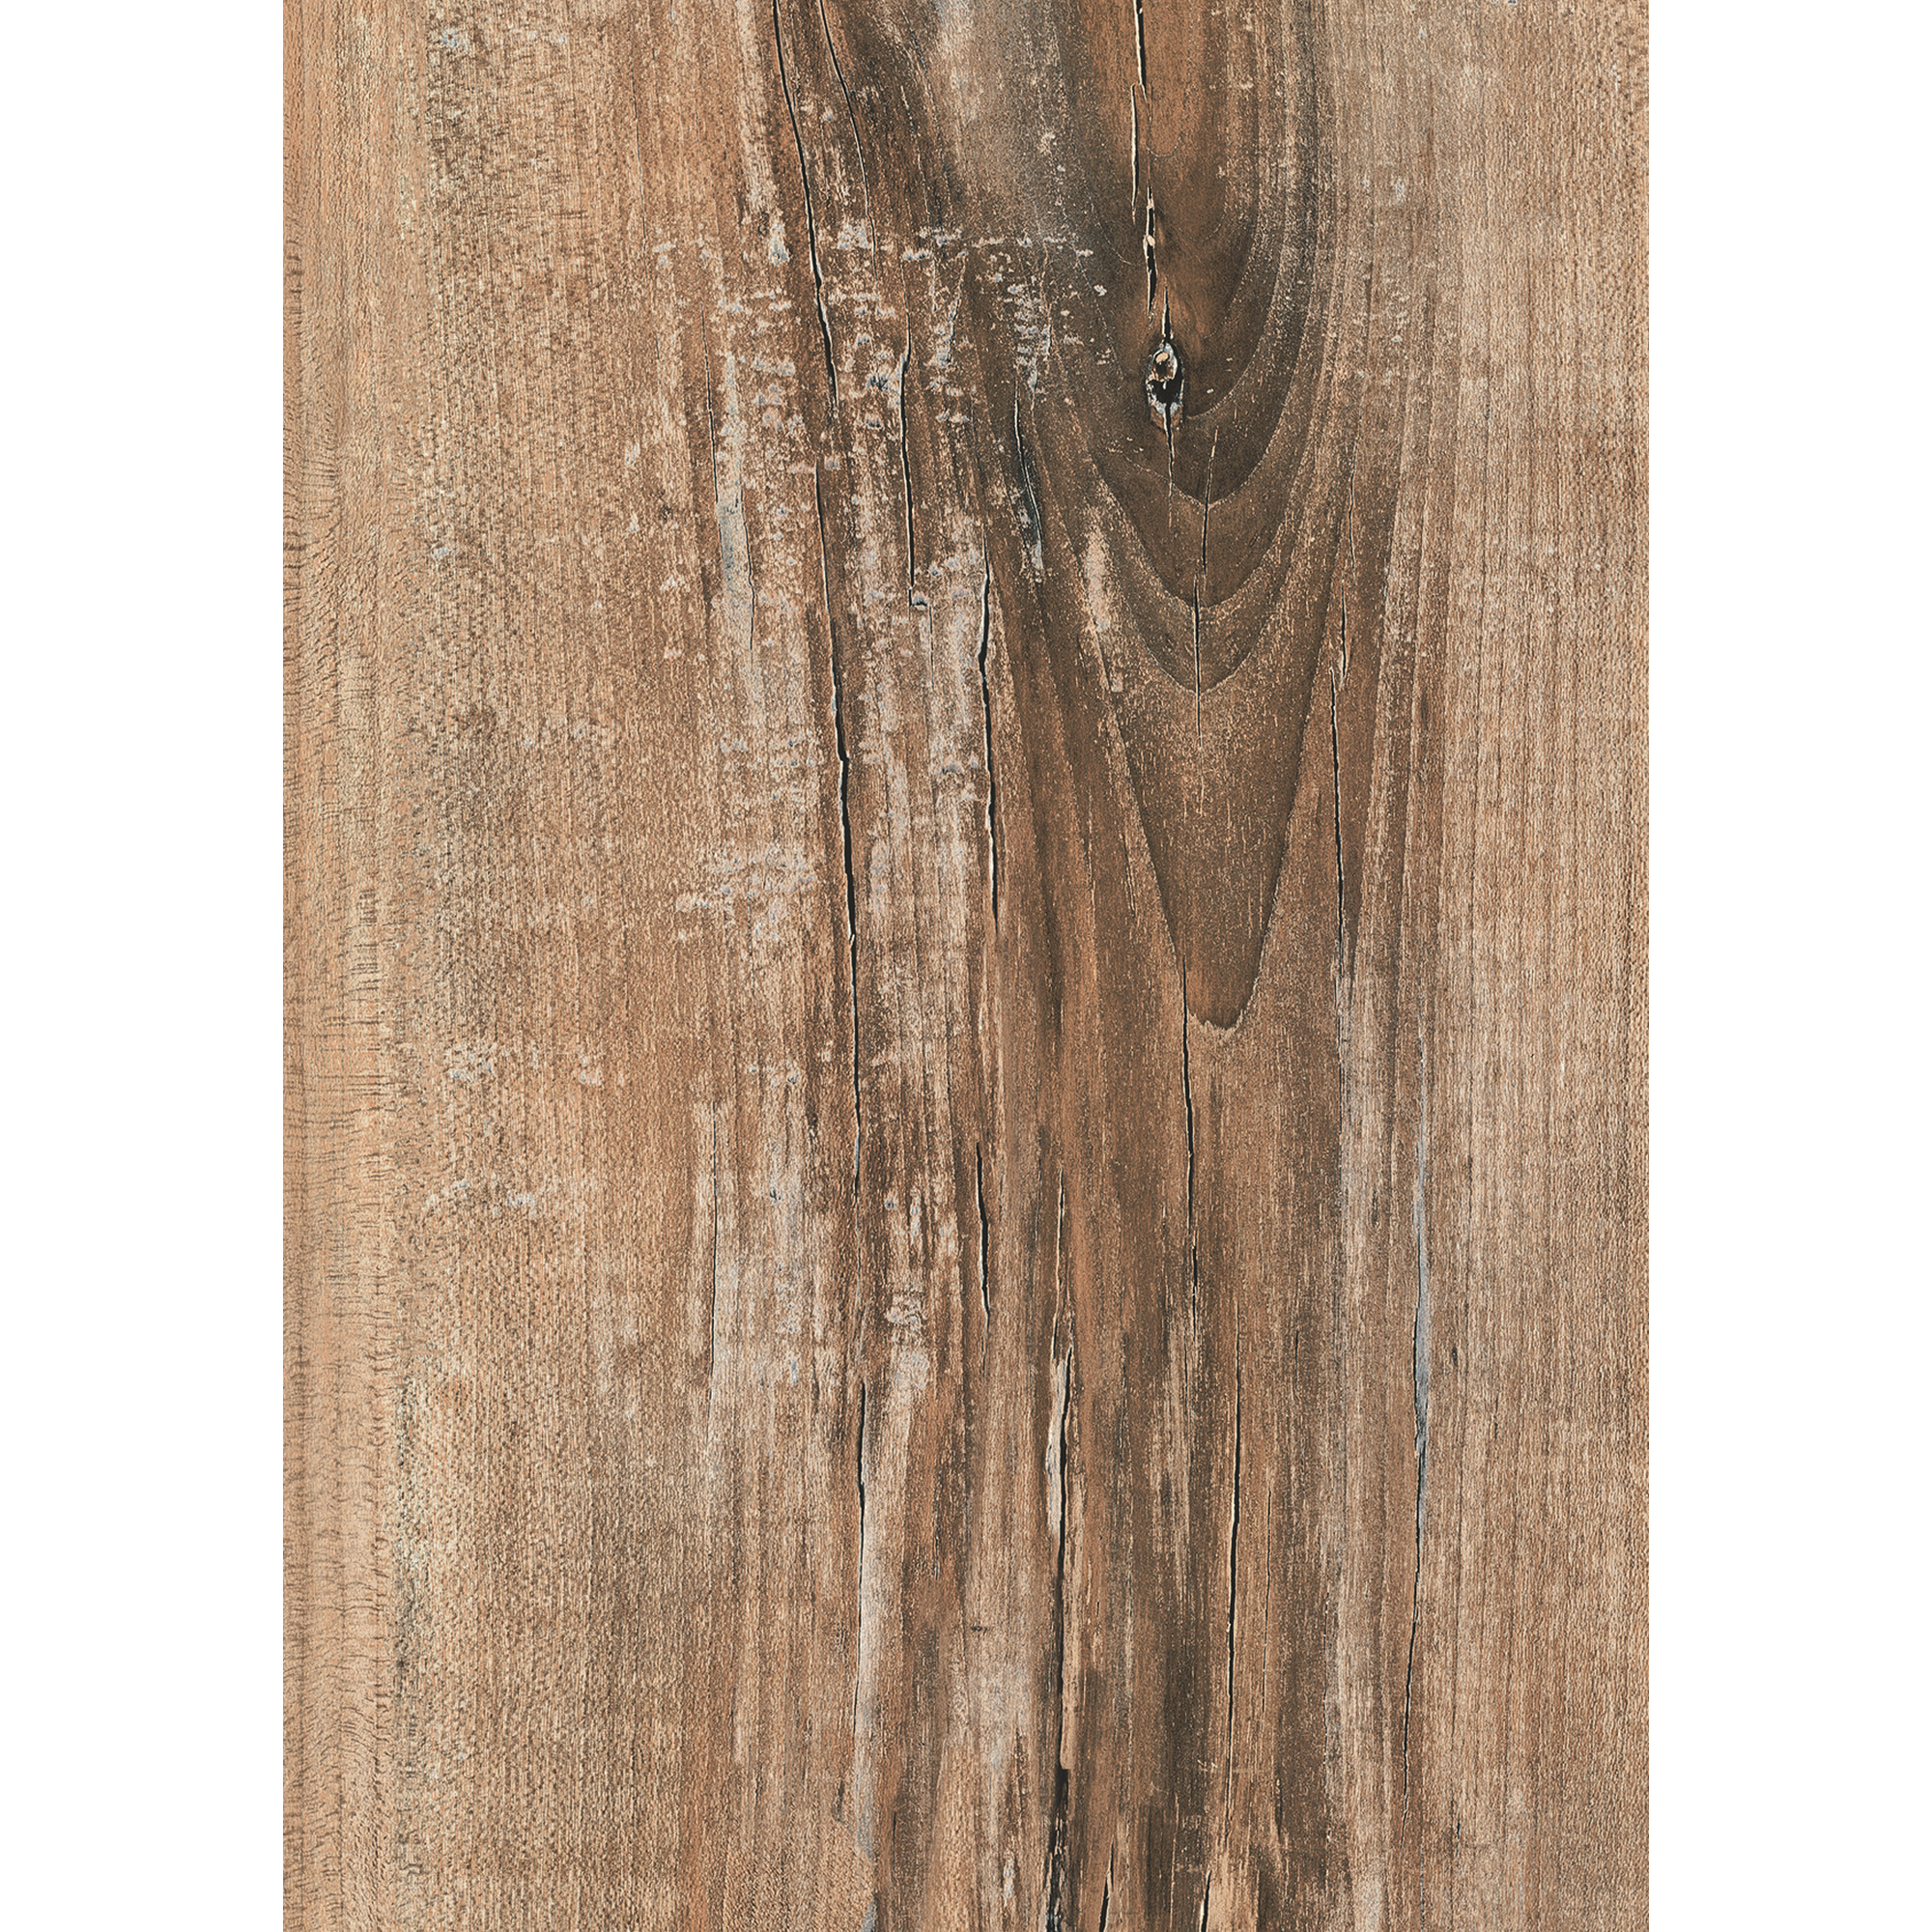 Arbeitsplatte '34232' Arizona Pine braun 2750 x 600 x 38 mm + product picture